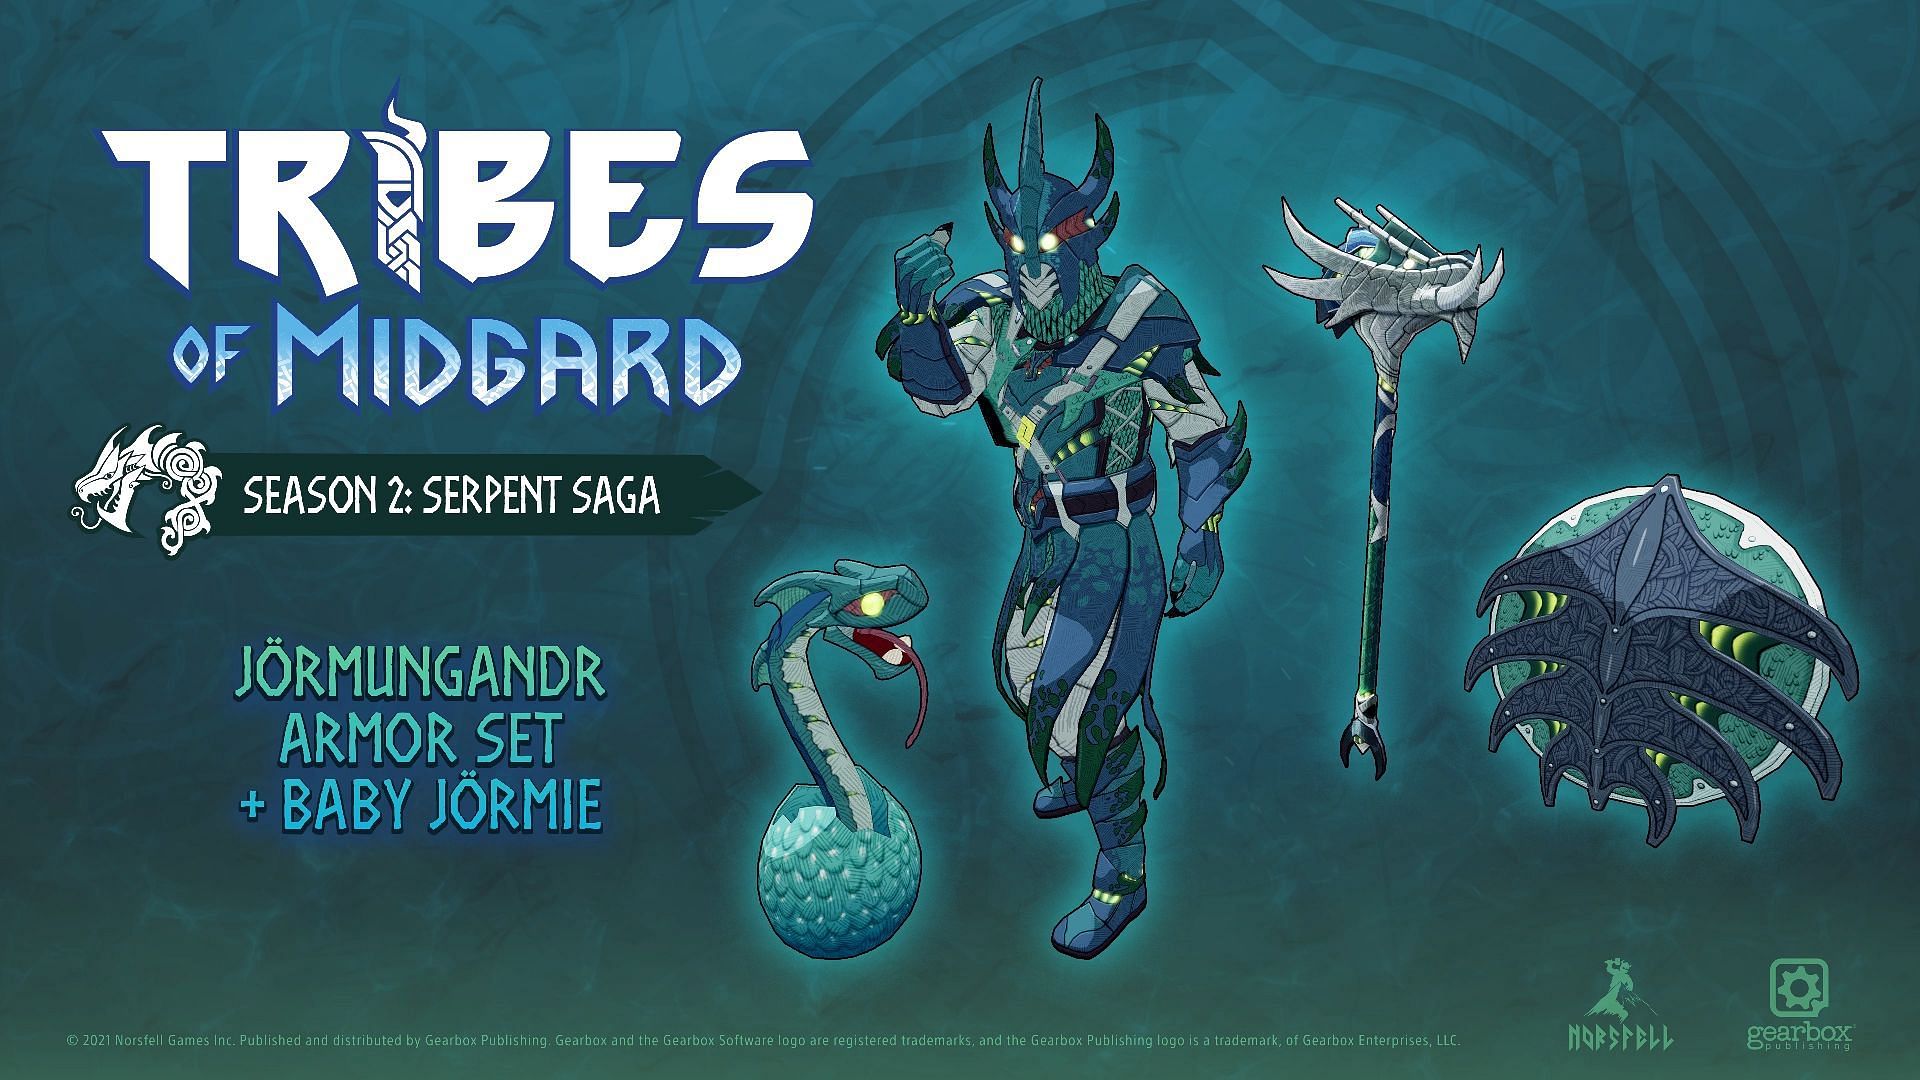 New Pet coming with Serpent Saga (Image via Tribes of Midgard)